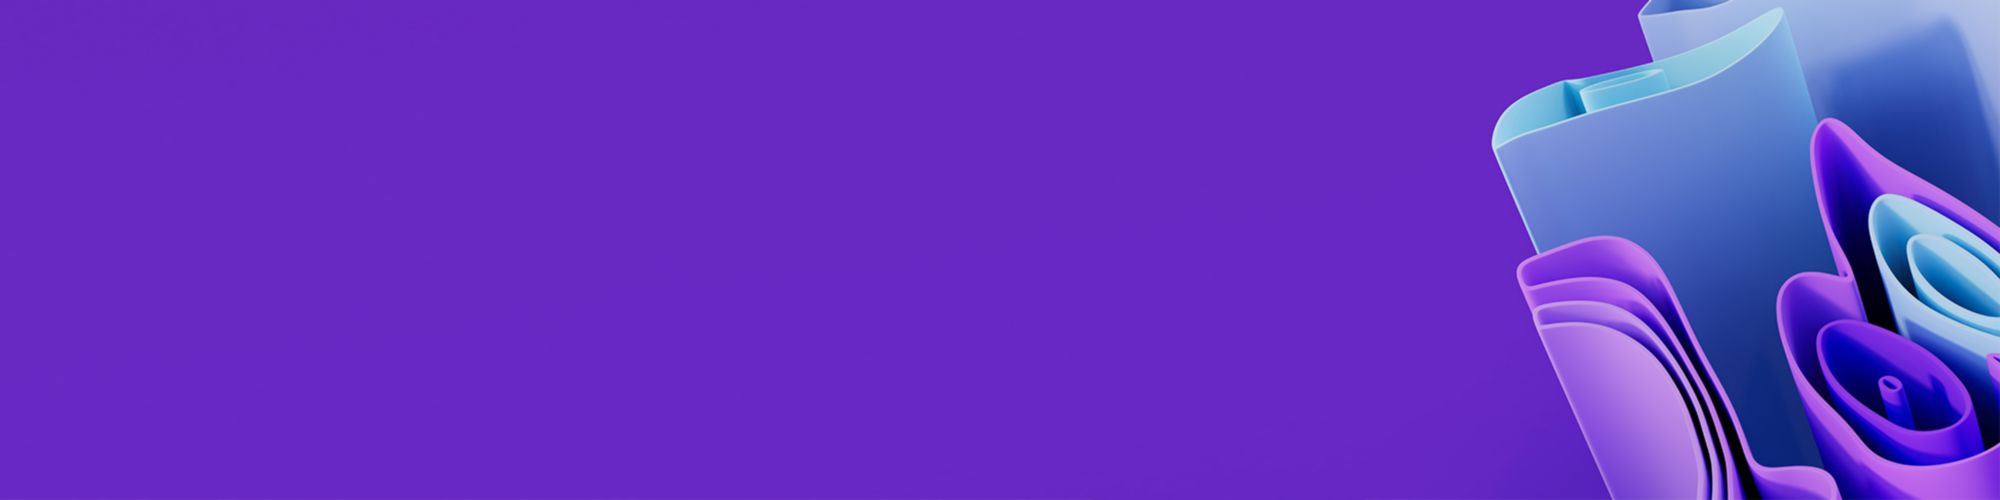 banner-purple-blue